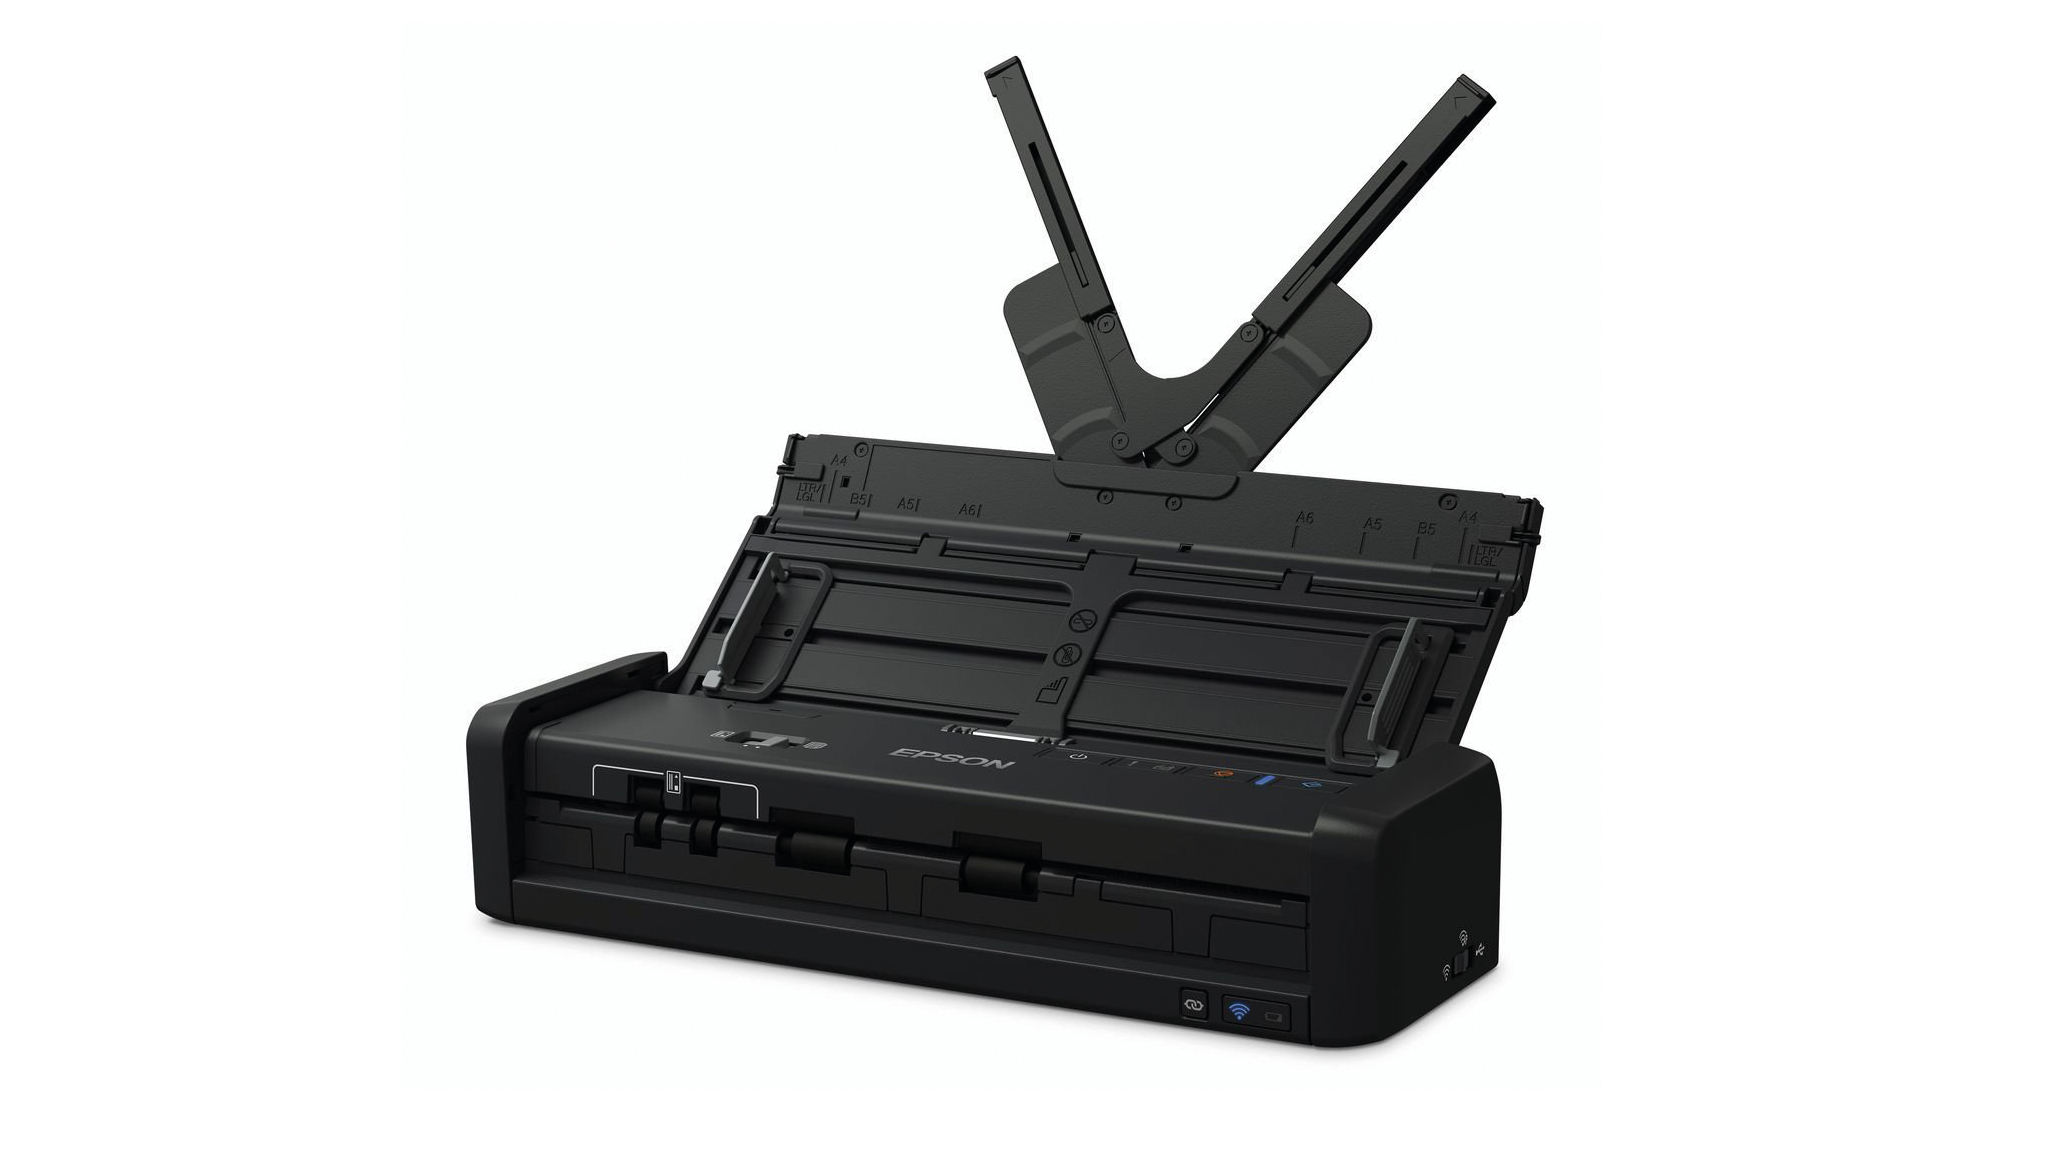 Scanner Compact Epson WorkForce DS-360W (B11B242401)